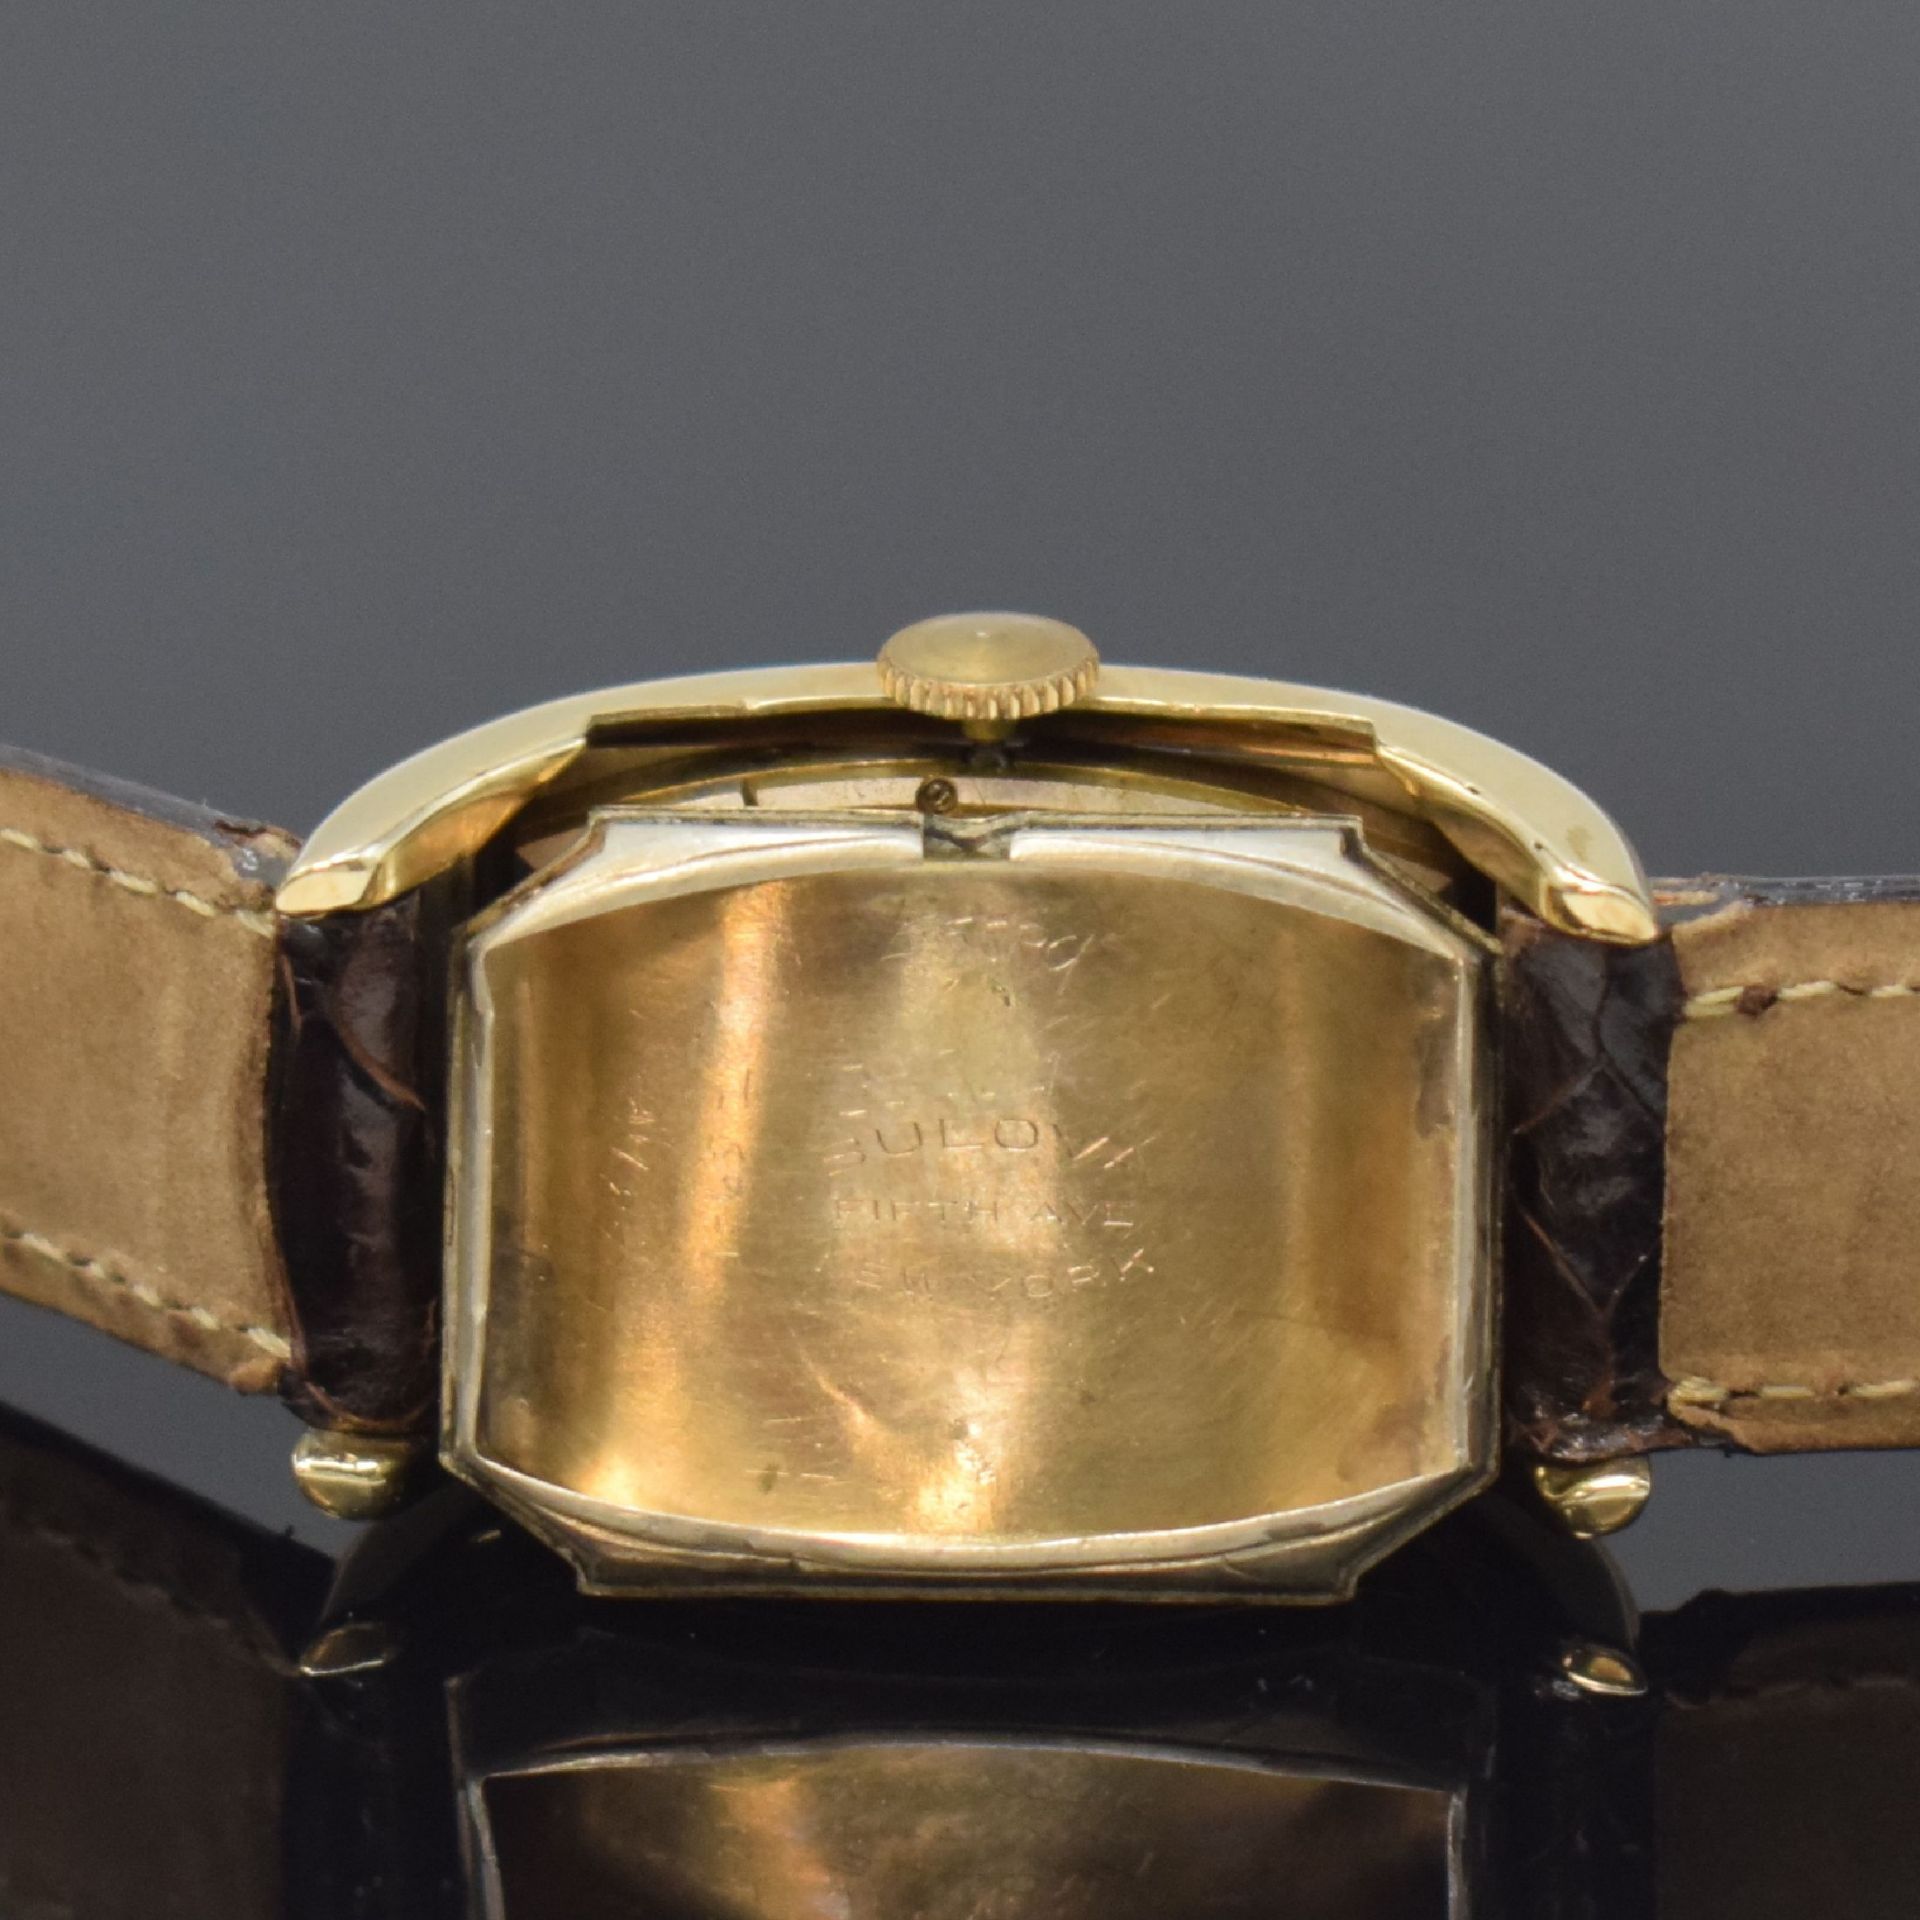 BULOVA Drivers und 3 weitere vergoldete Armbanduhren, USA - Image 6 of 9